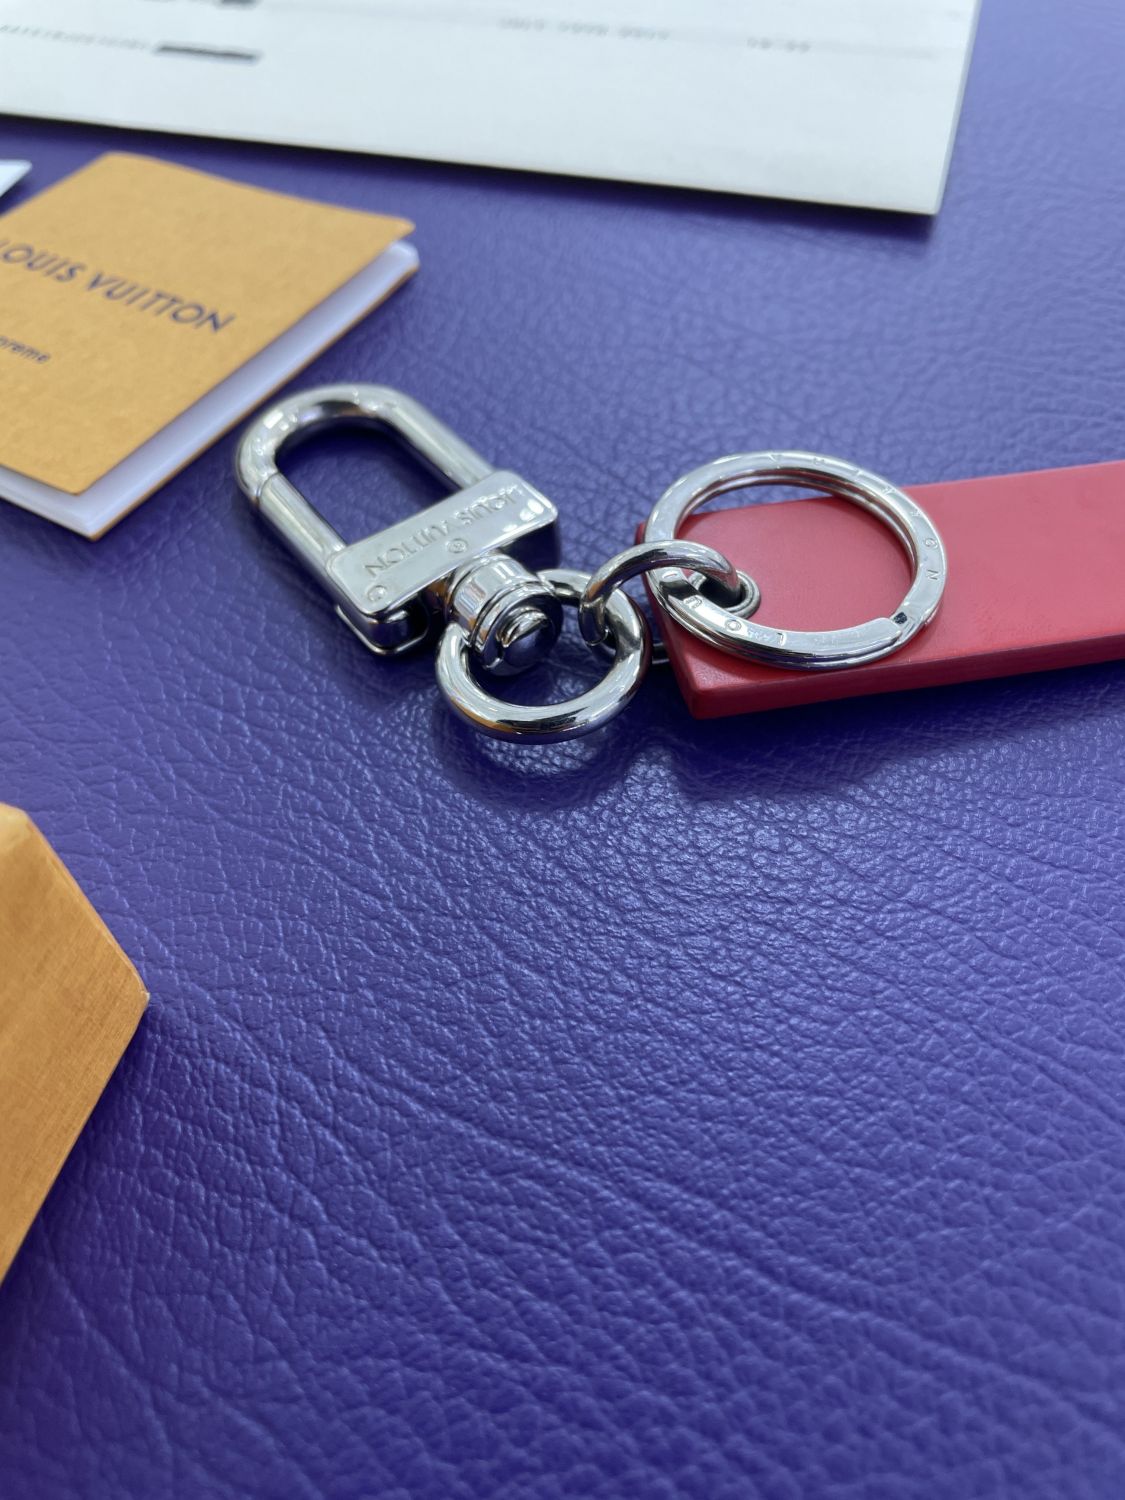 Supreme Louis Vuitton Supreme Epi Leather Keychain